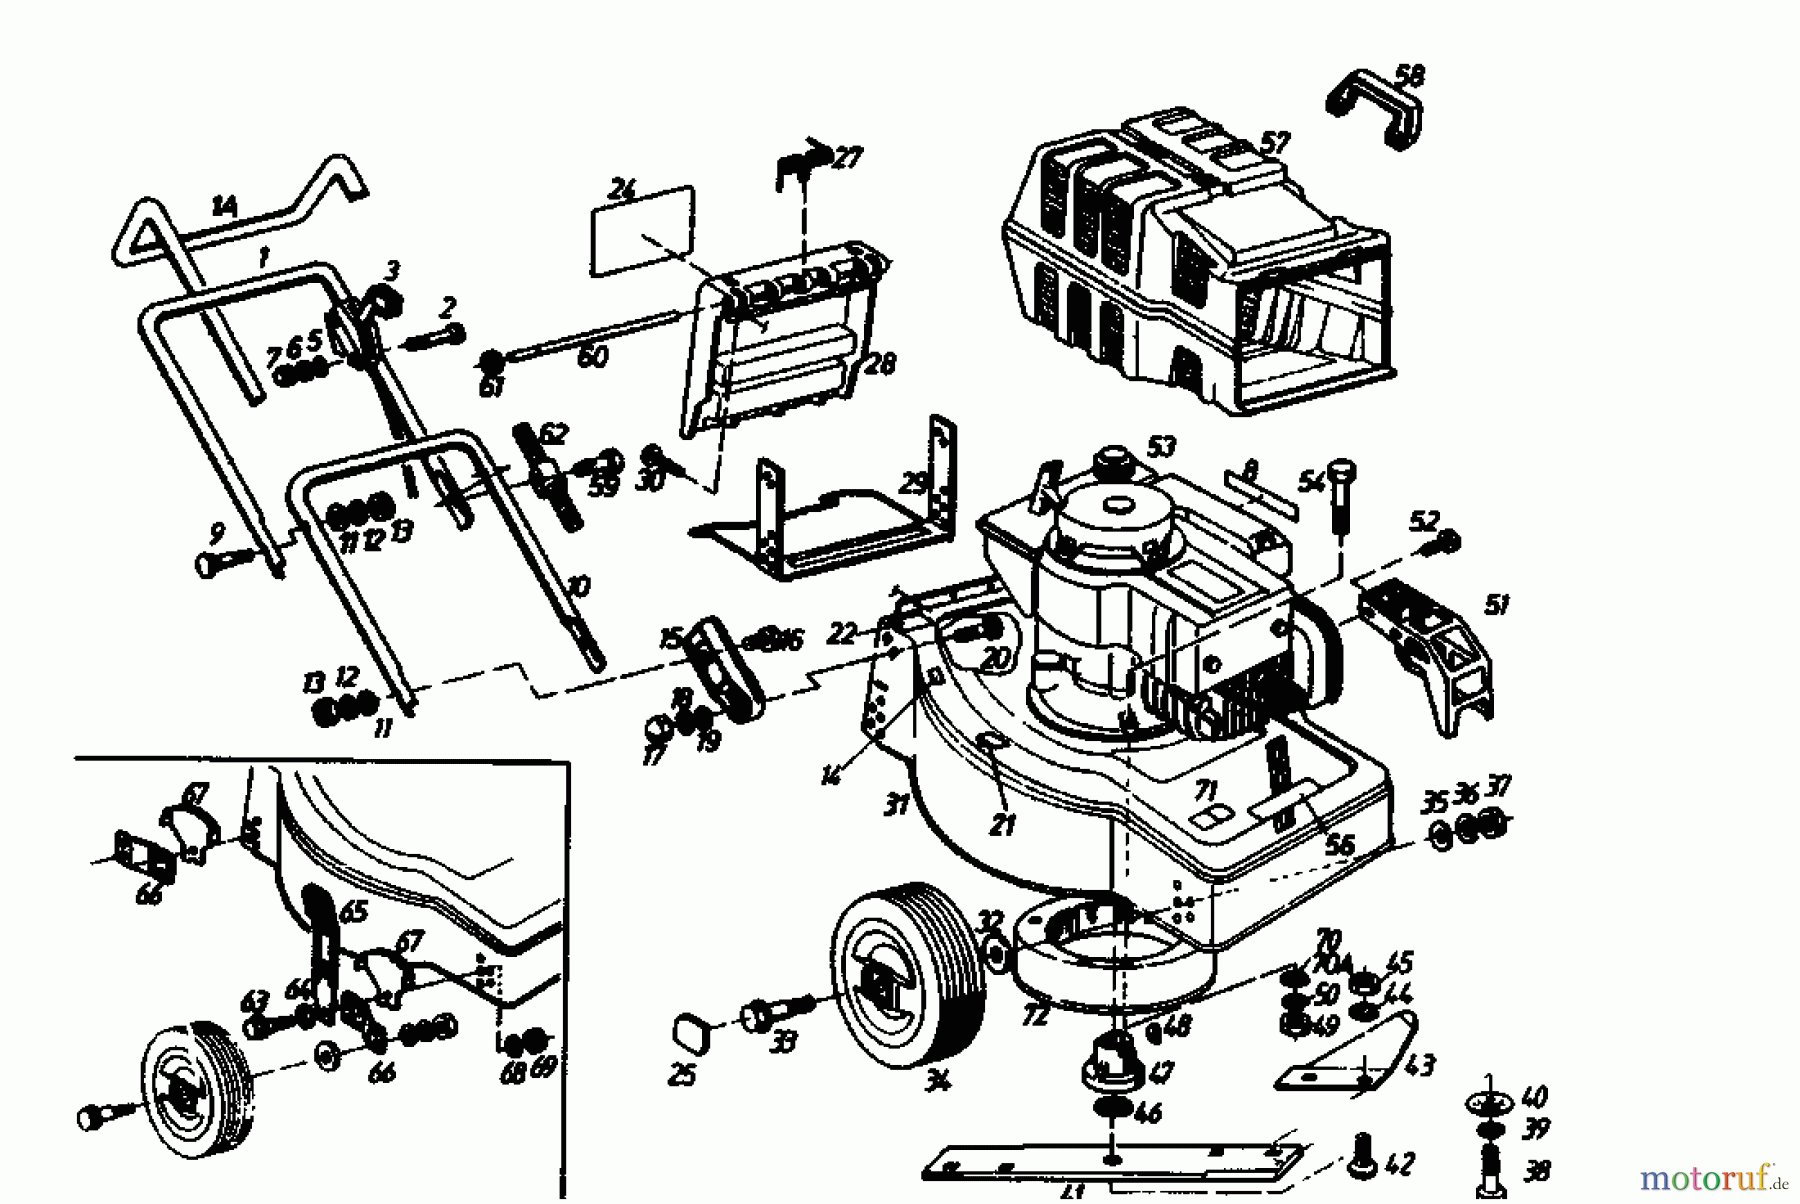  Golf Petrol mower Golf B 02880.01  (1989) Basic machine